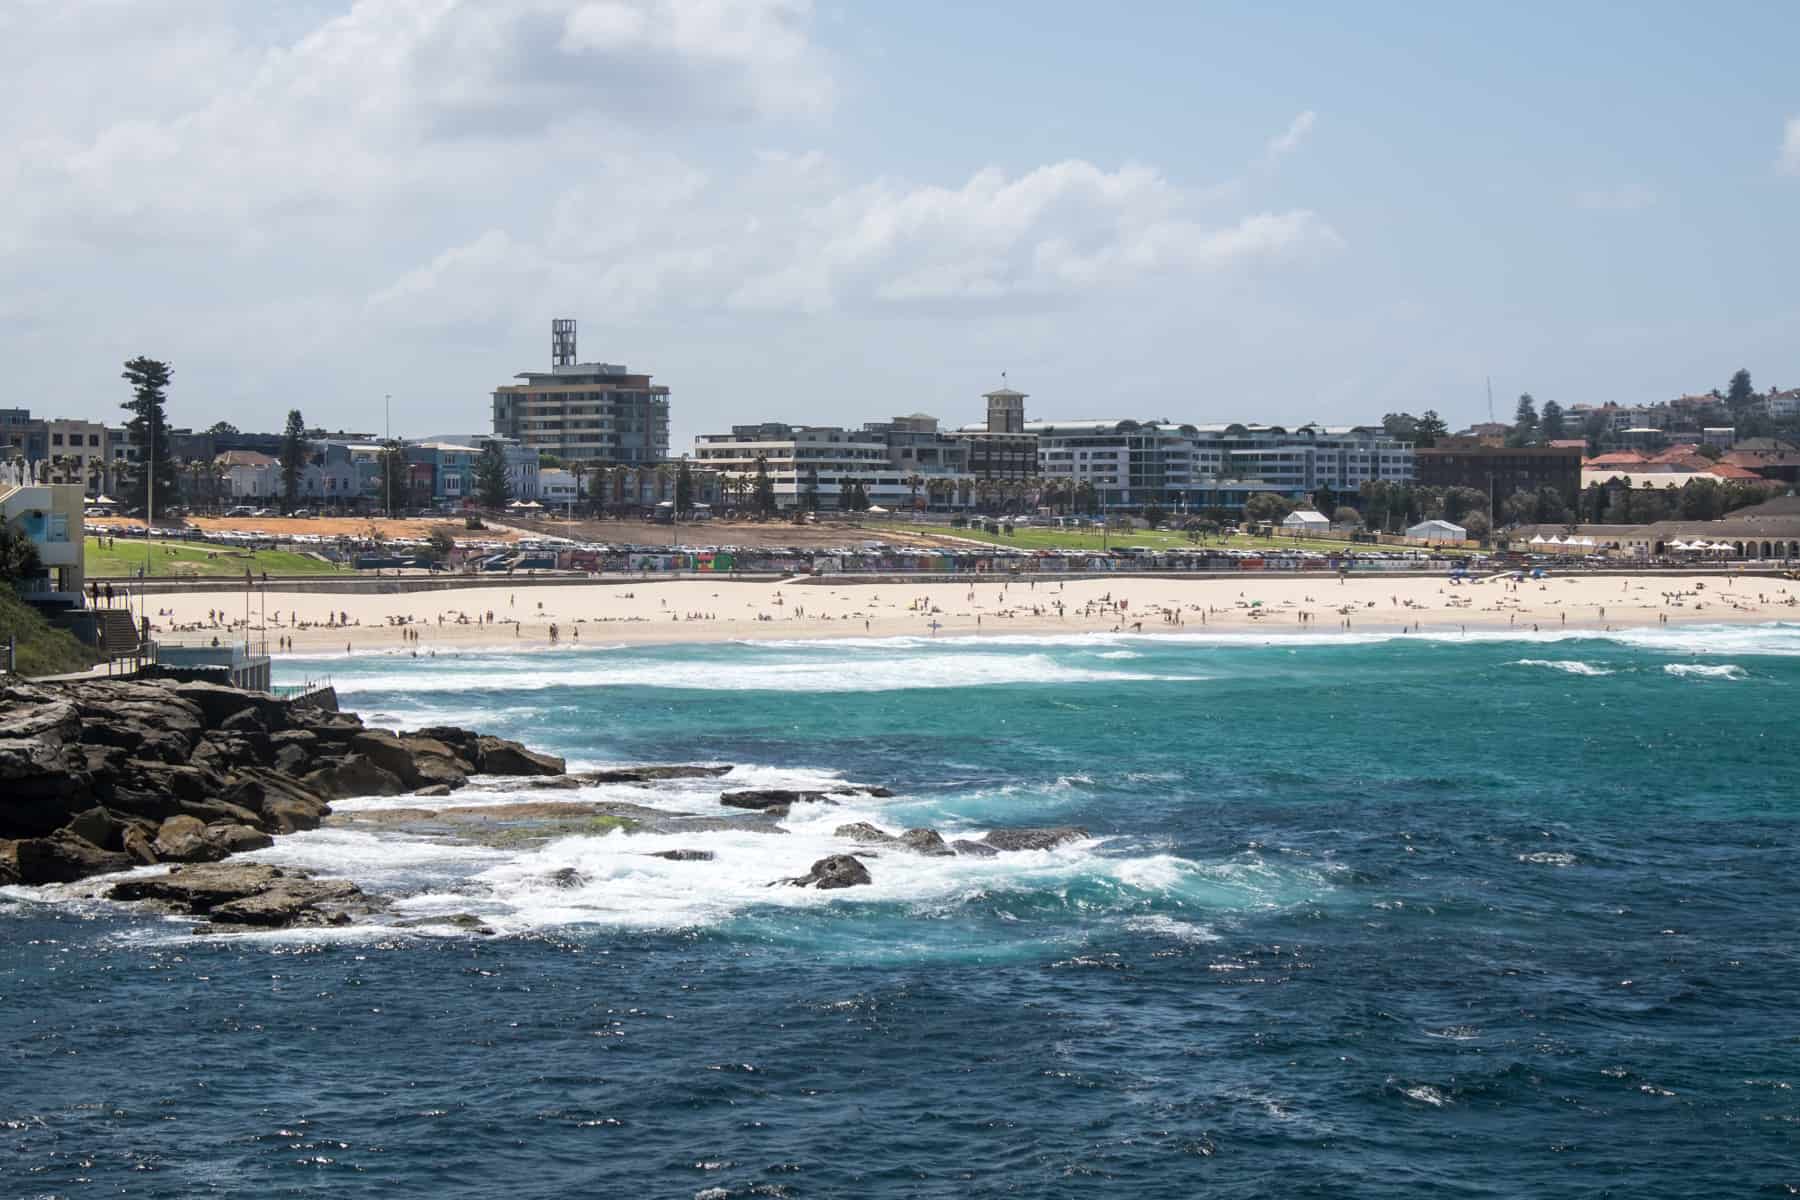 Far away view of the long white sand coastline of Bondi Beach in Sydney Australia and the deep blue crashing ocean waves